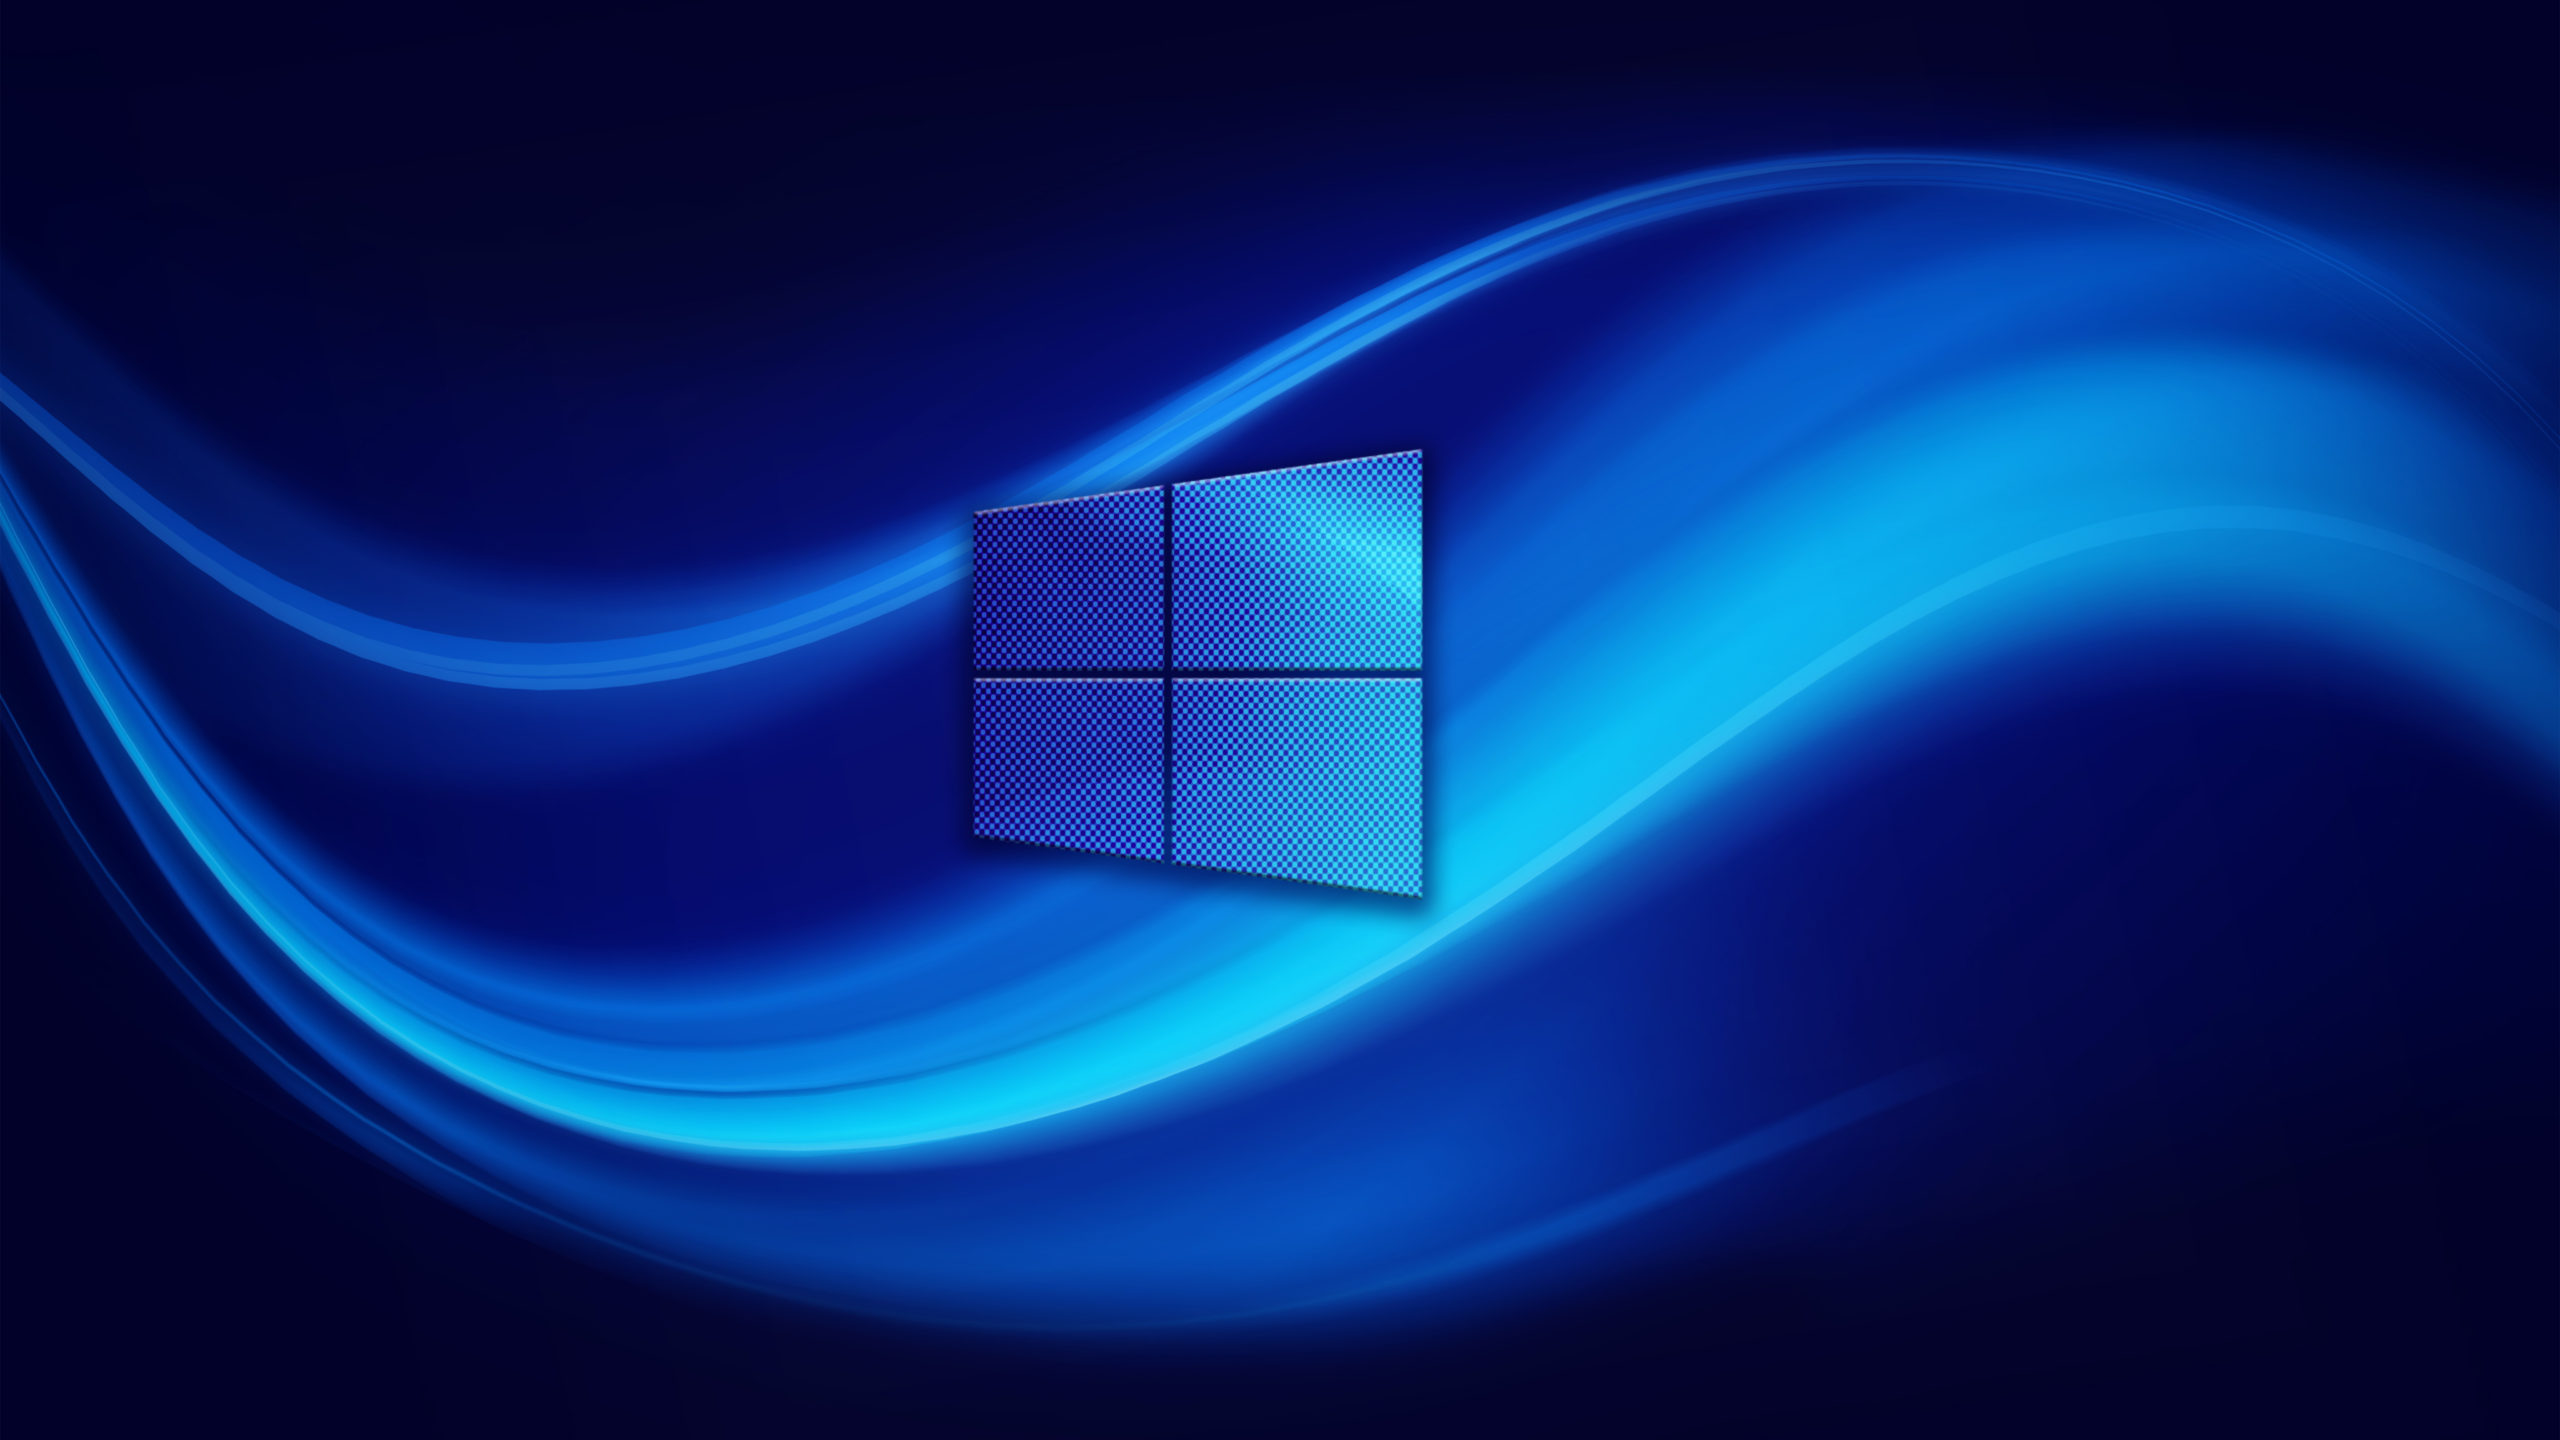 Windows 10 Wallpaper 4k Desktop Windows 10 Wallpaper 4k